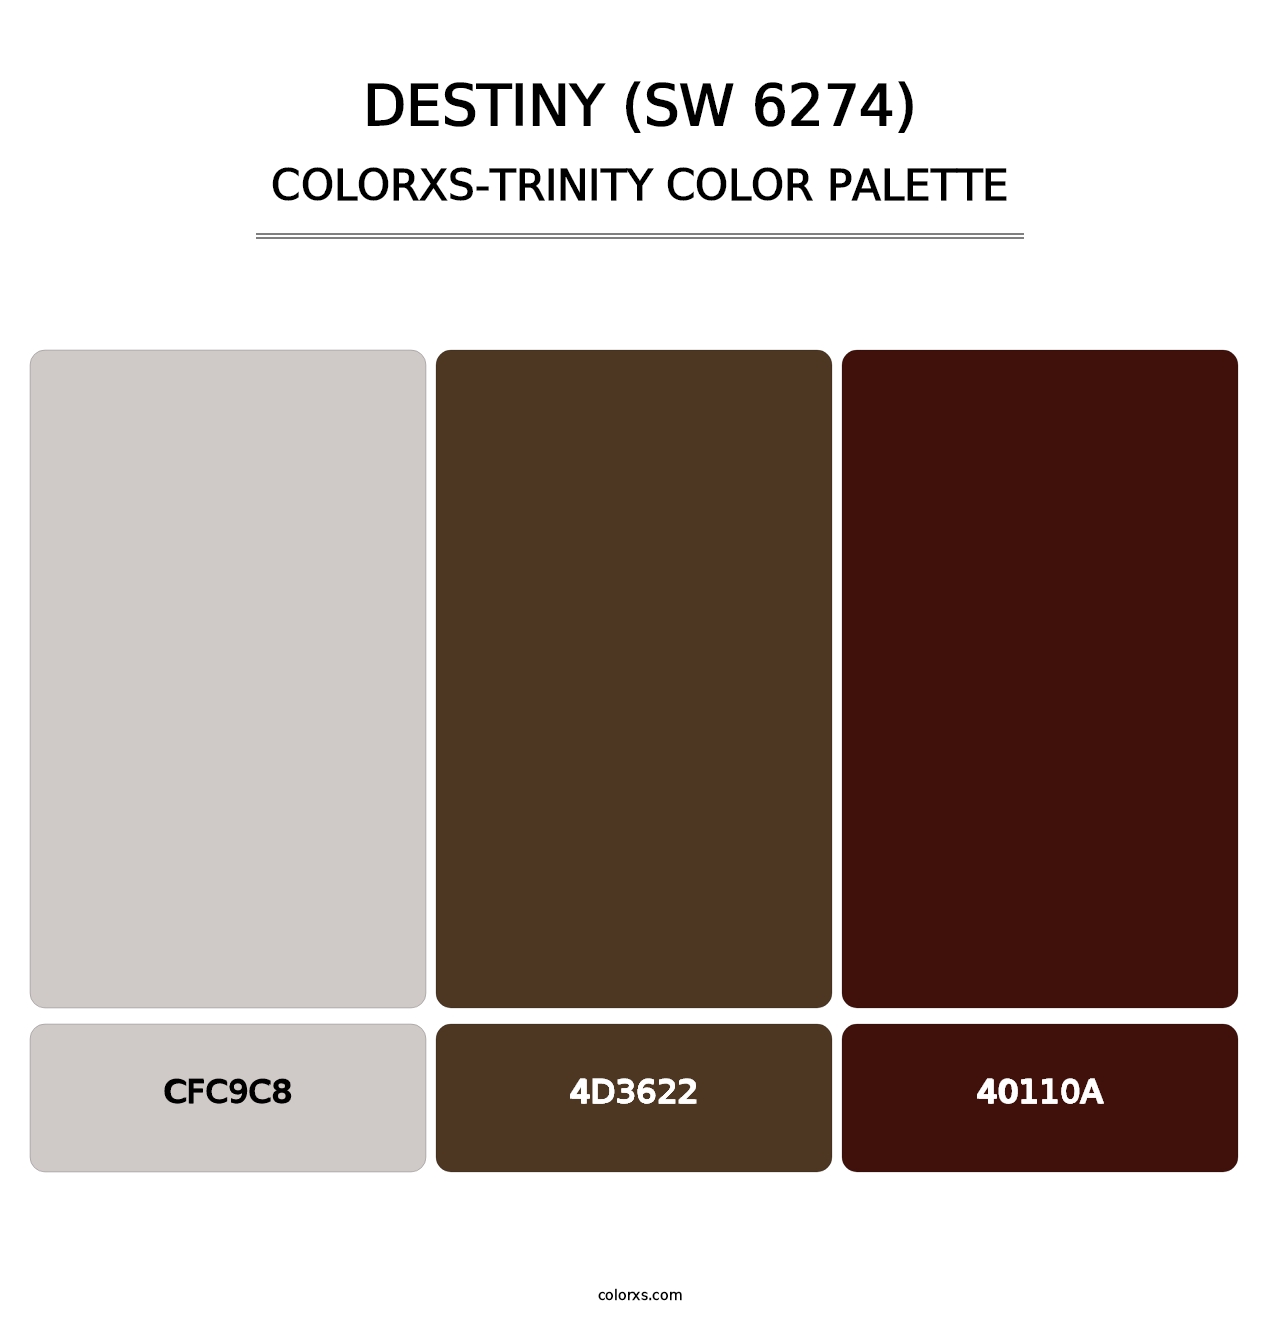 Destiny (SW 6274) - Colorxs Trinity Palette